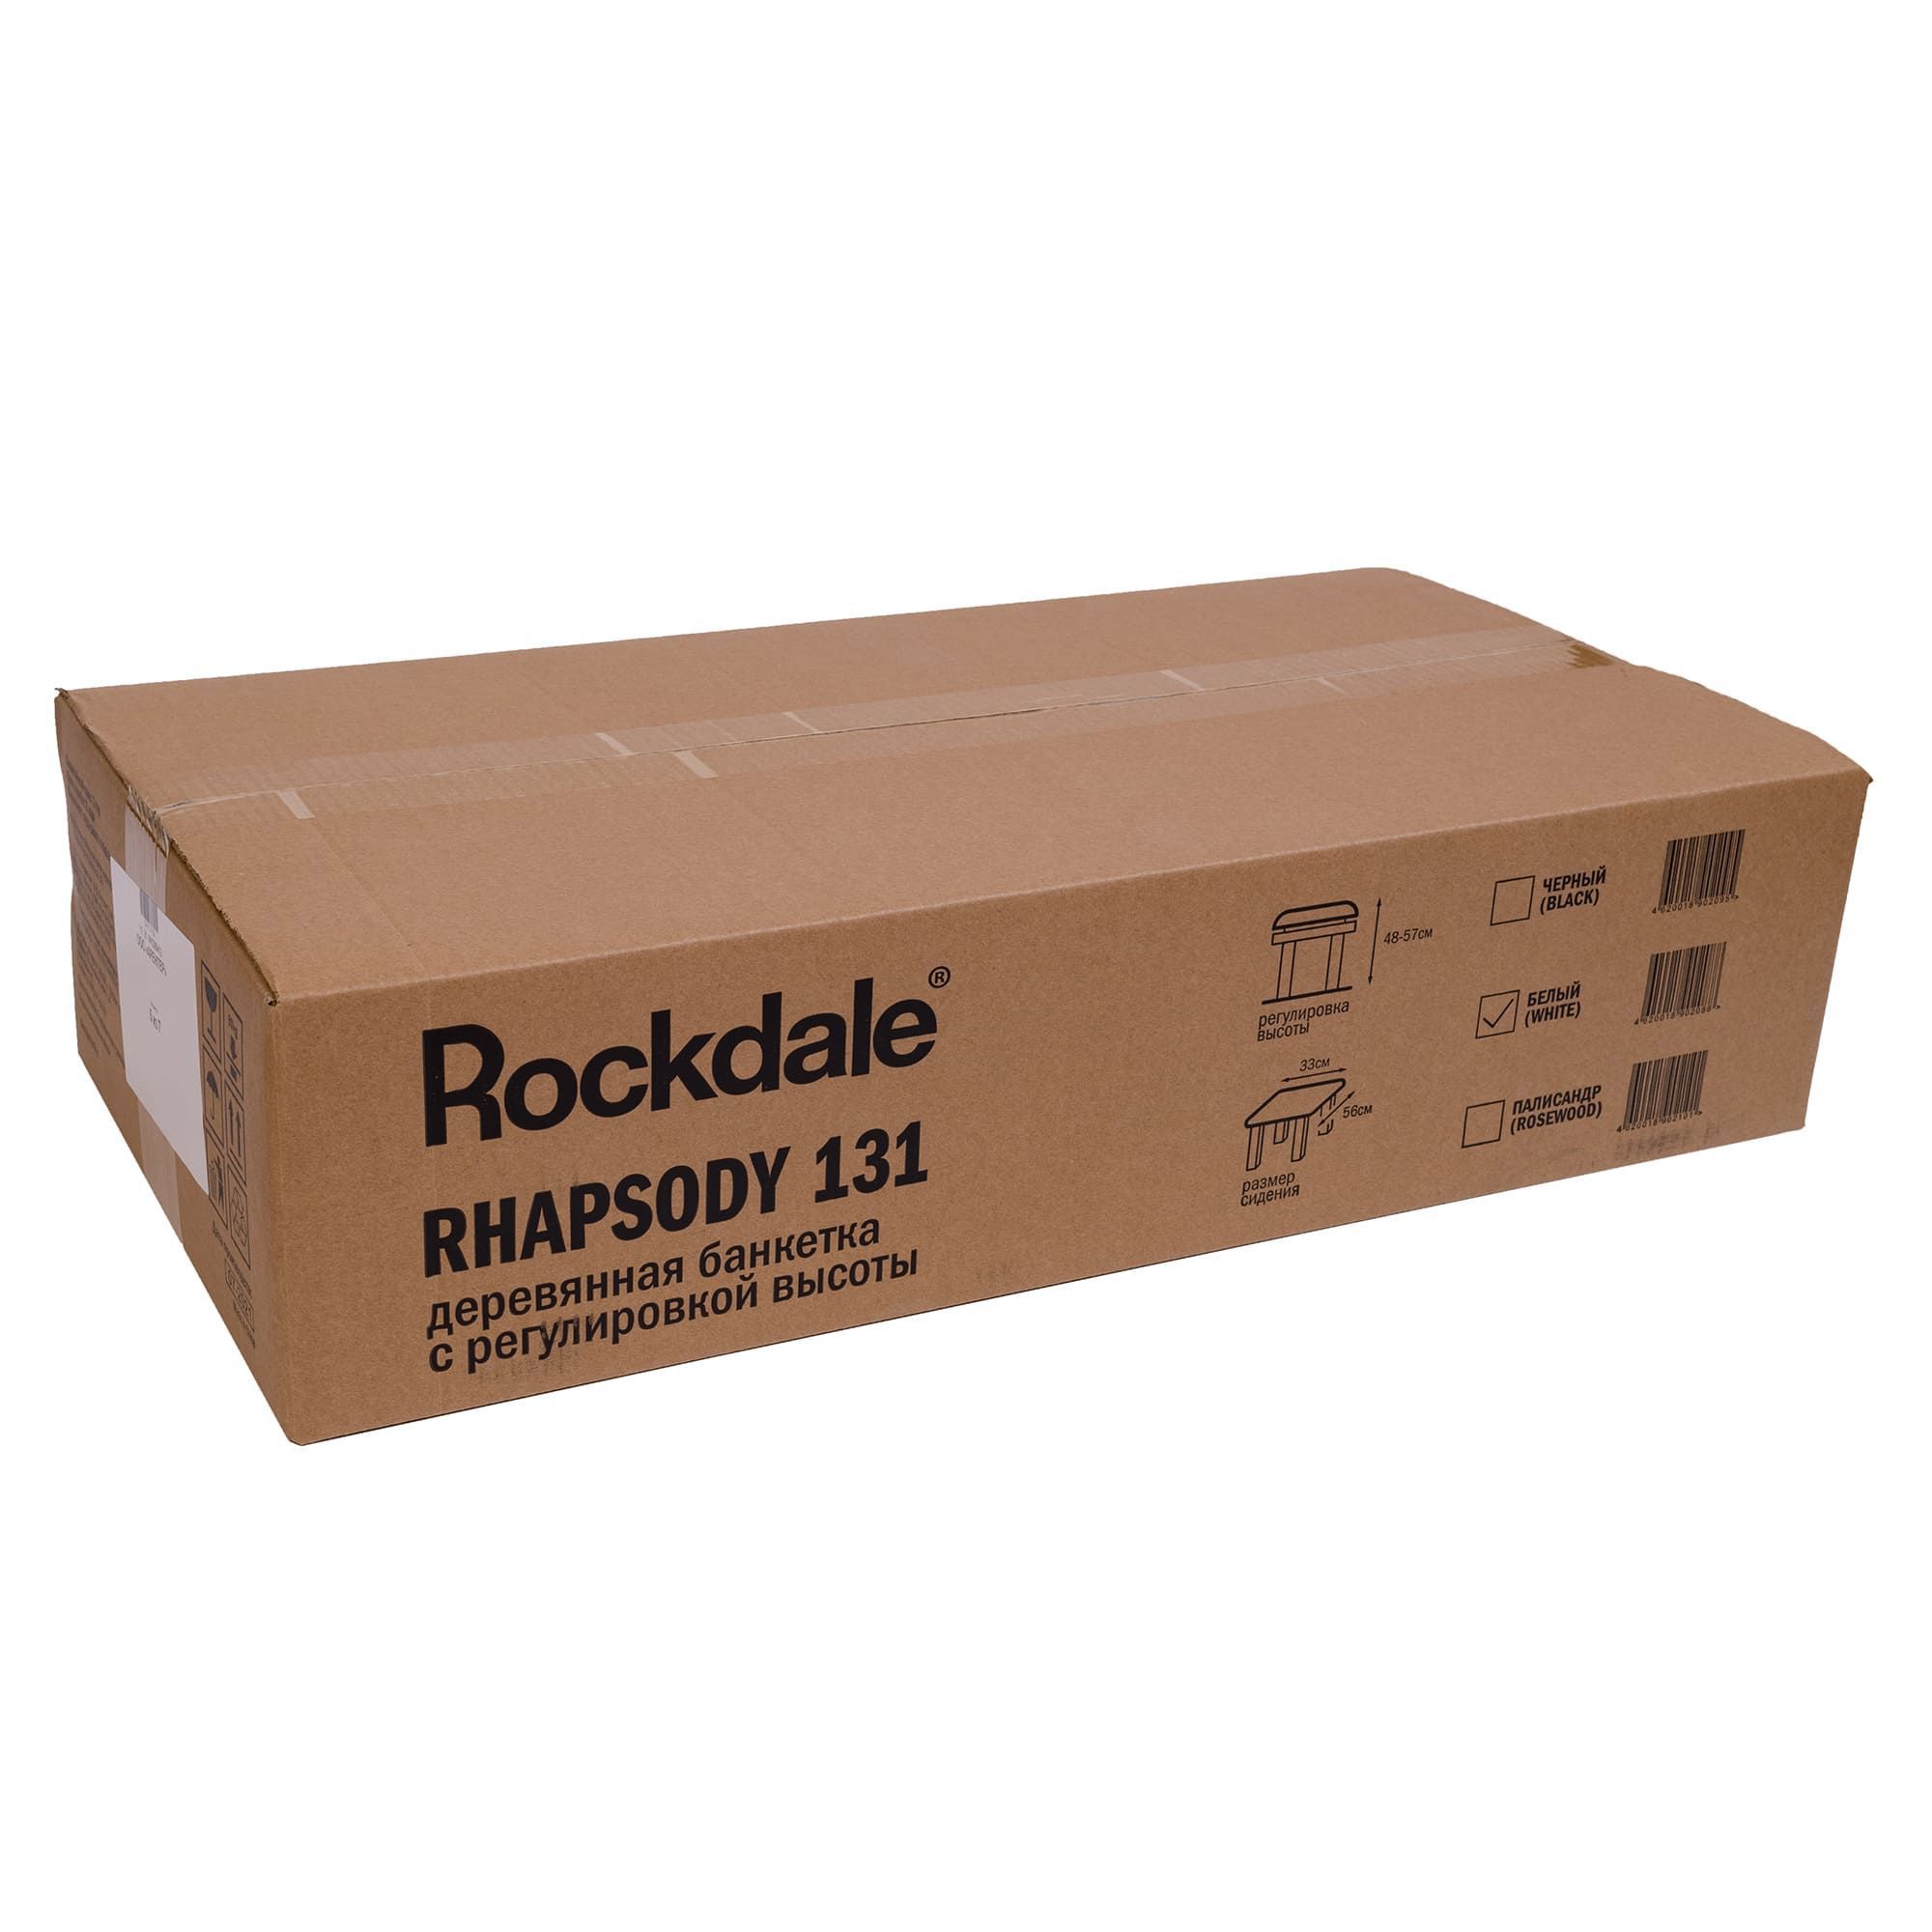 Rockdale RHAPSODY 131 WHITE Банкетки для клавишных инструментов